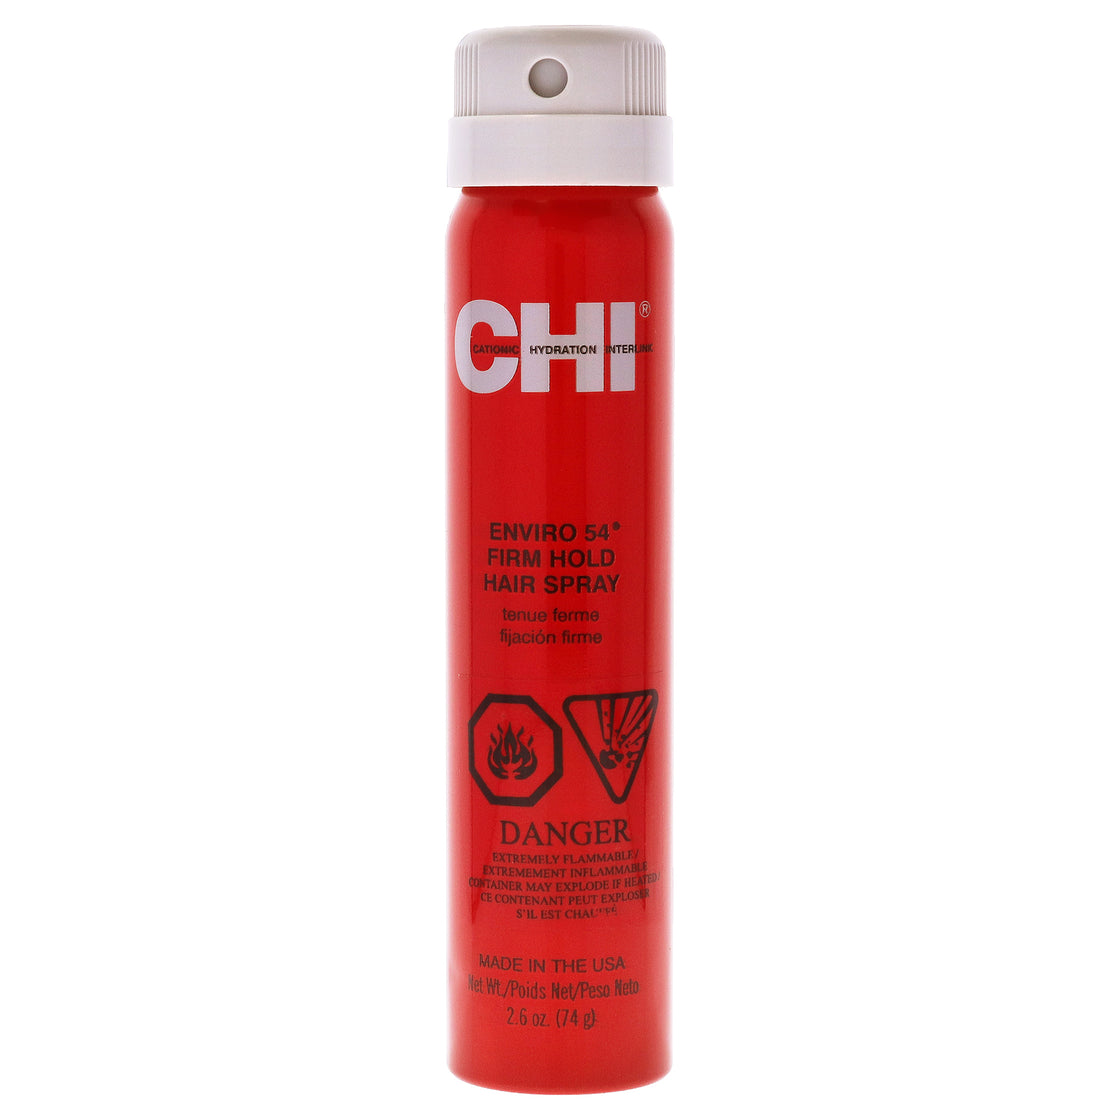 Enviro 54 Firm Hold Hairspray by CHI for Unisex - 2.6 oz Hair Spray